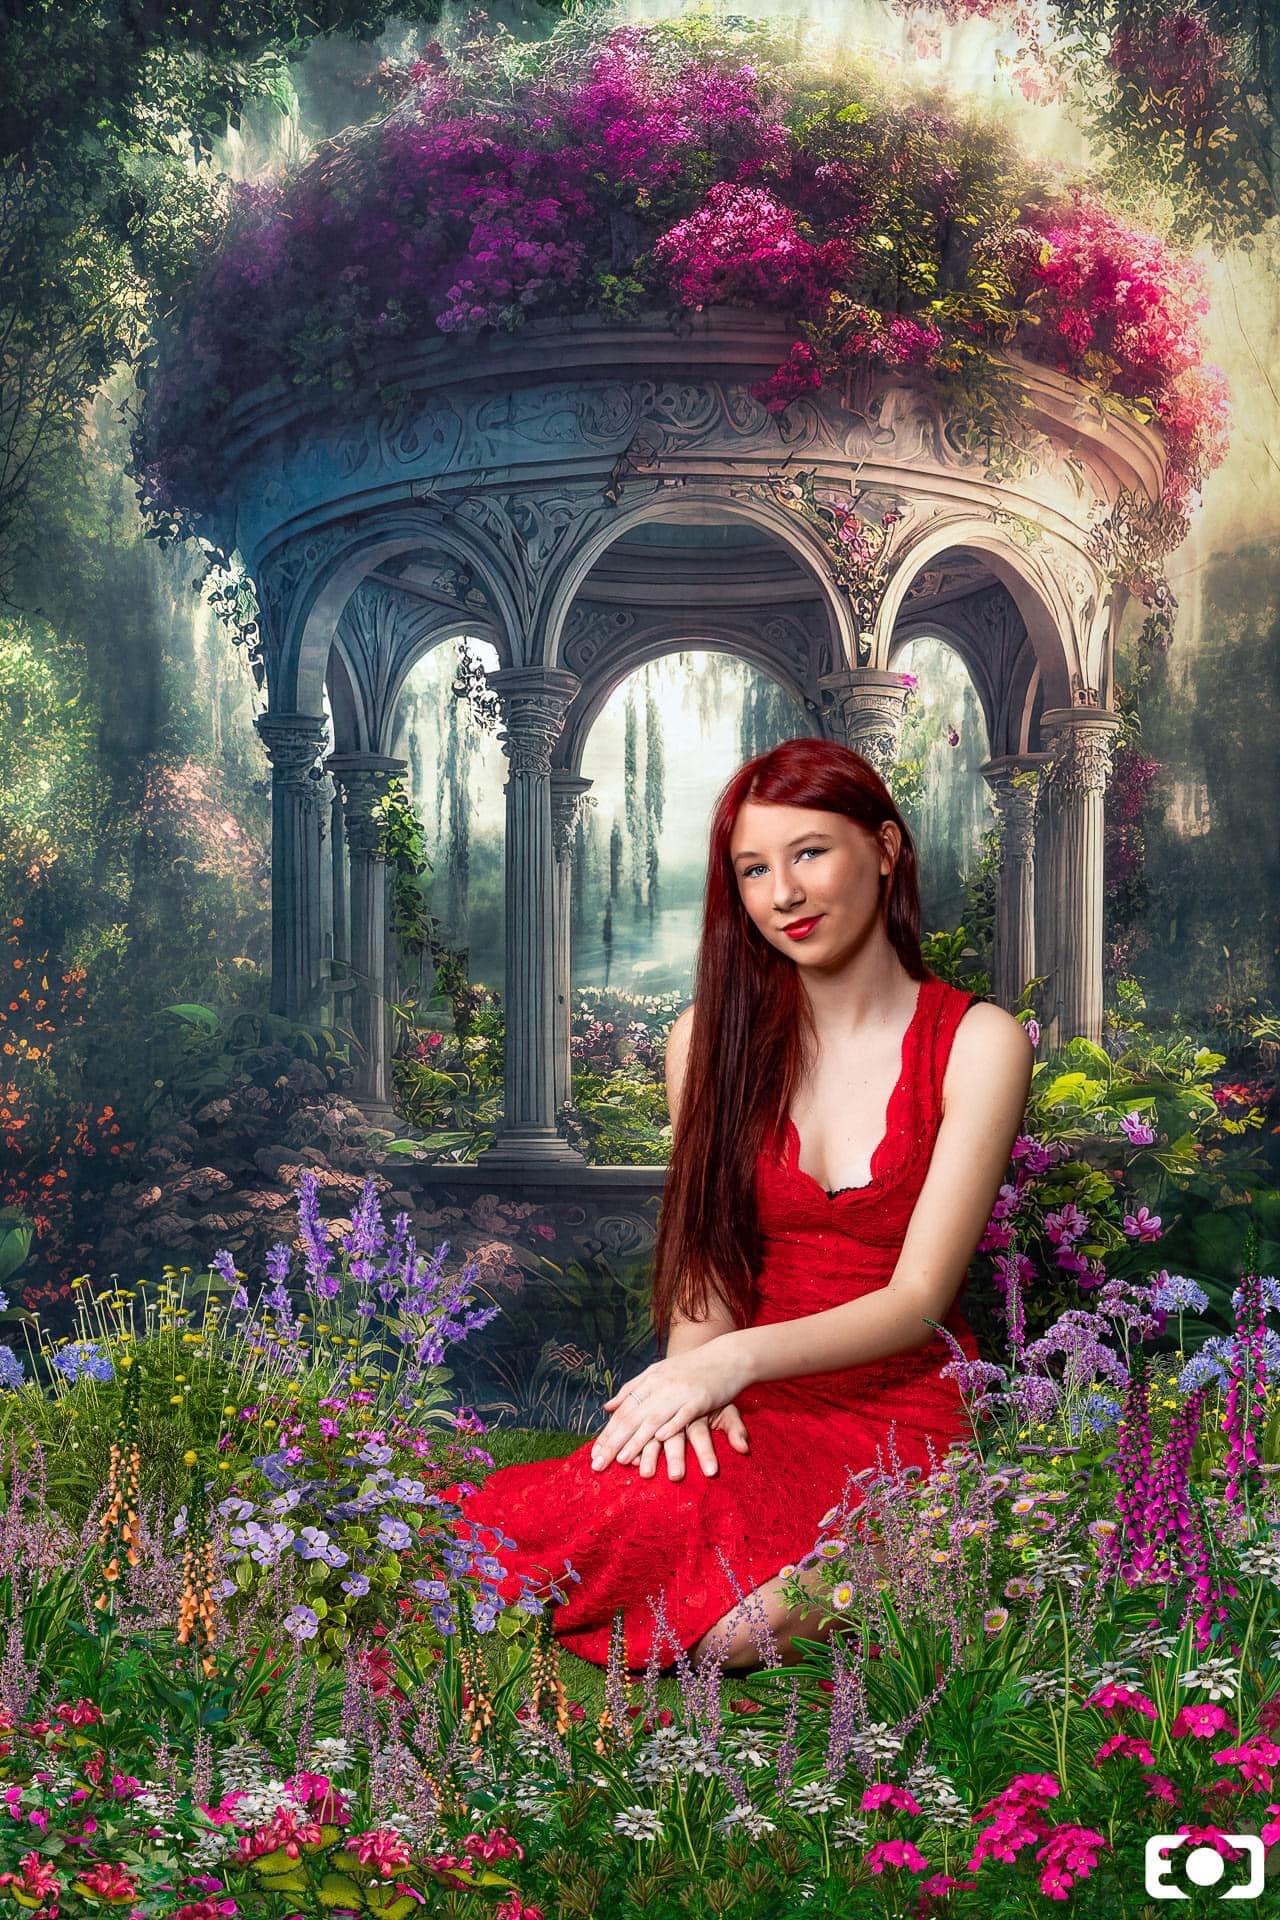 Kate Enchanted Gazebo Spring Fantasy Garden Hintergrundkulisse von Candice Compton